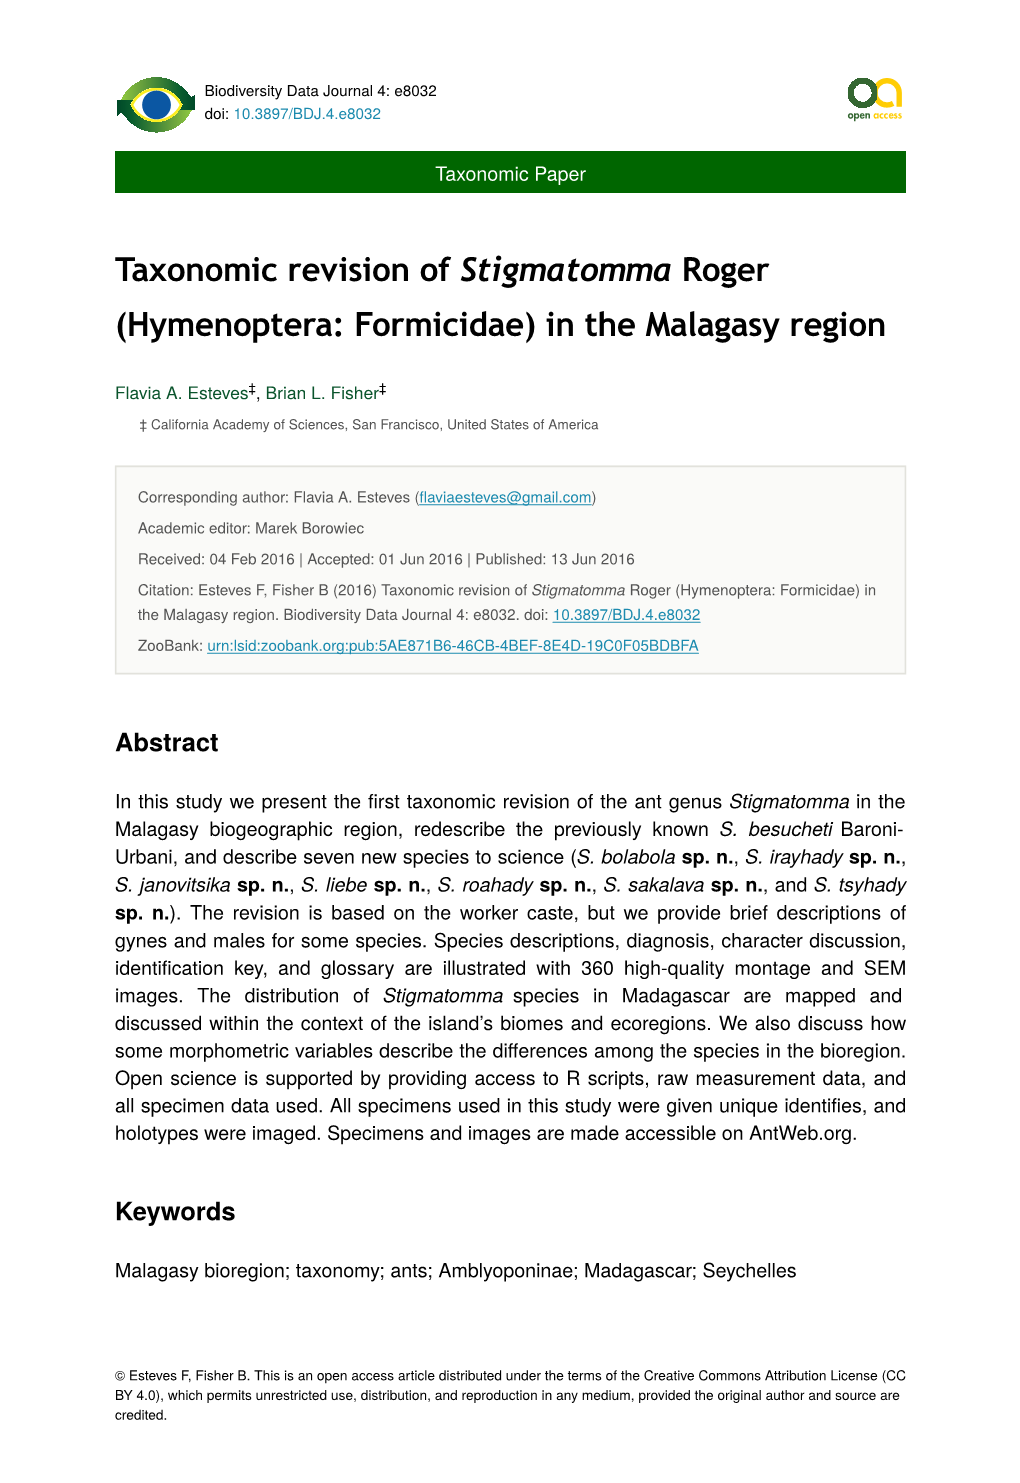 Taxonomic Revision of Stigmatomma Roger (Hymenoptera: Formicidae) in the Malagasy Region